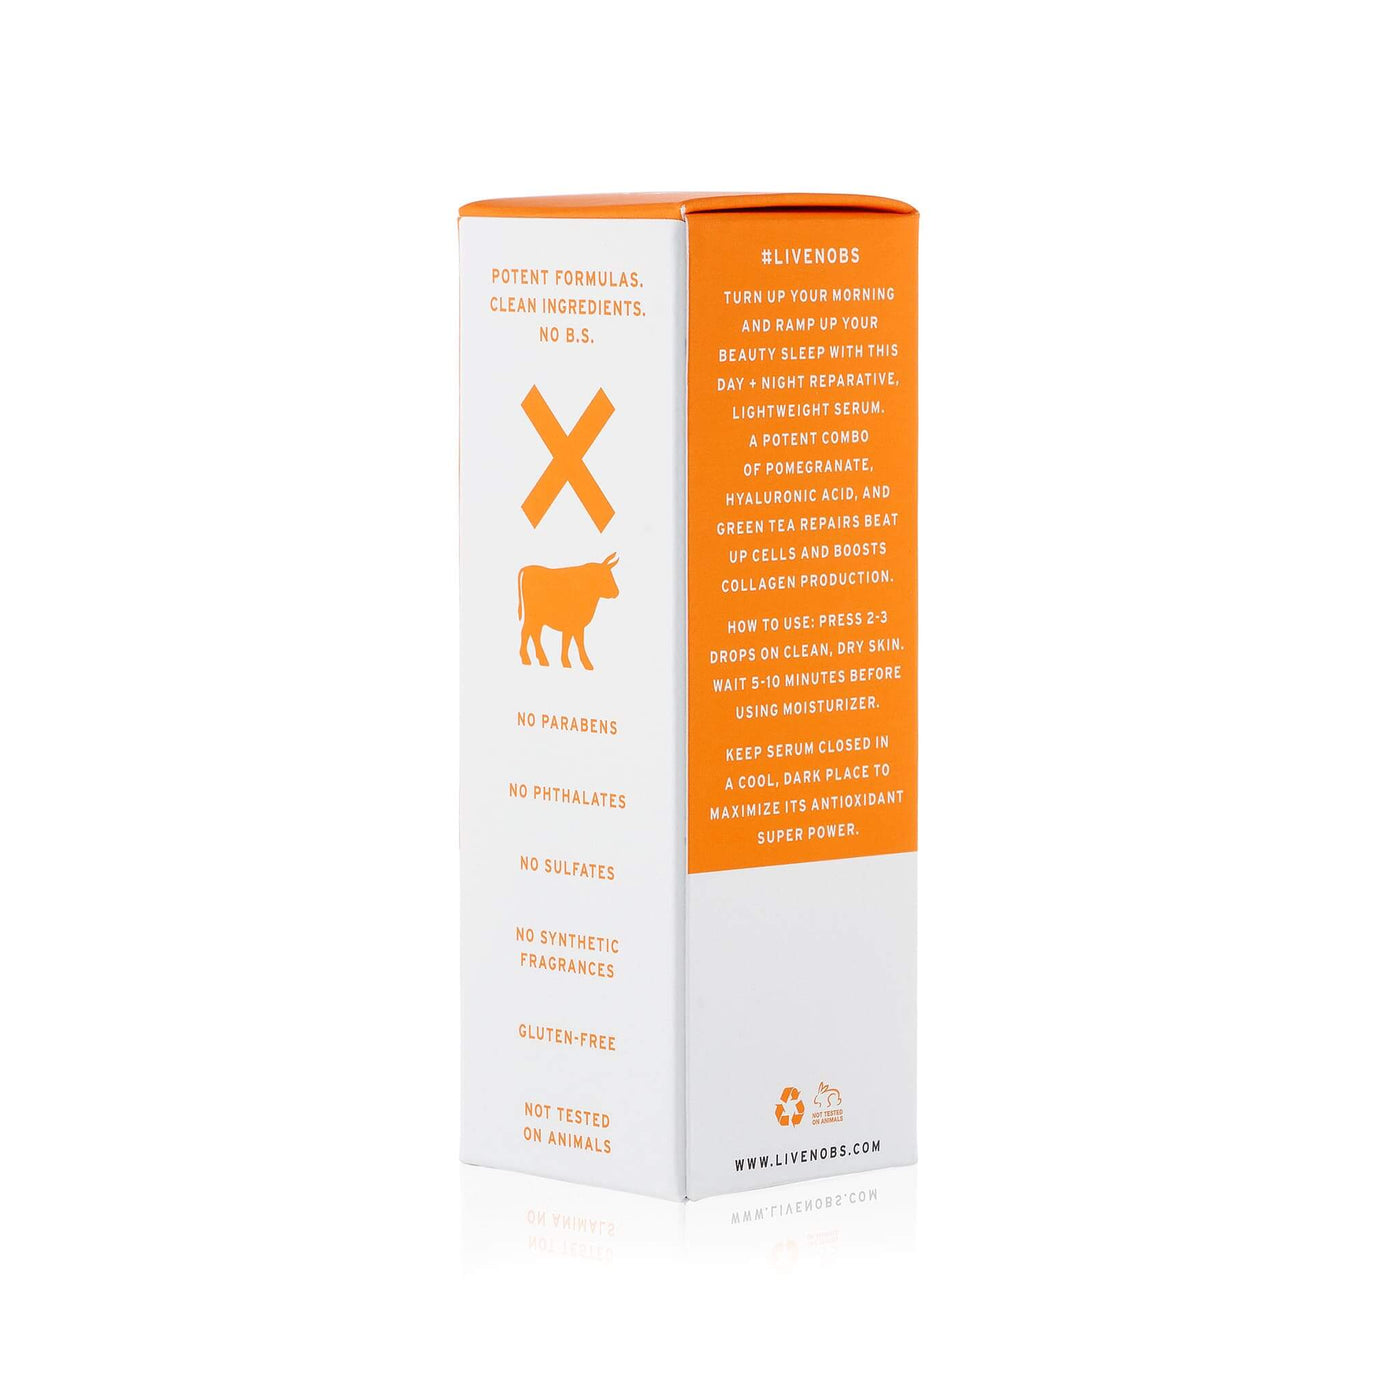 3-Pack: Vitamin C+E Serum (inc. 3 deluxe Minis: Charcoal Mask, CoQ10 & Eye Cream)